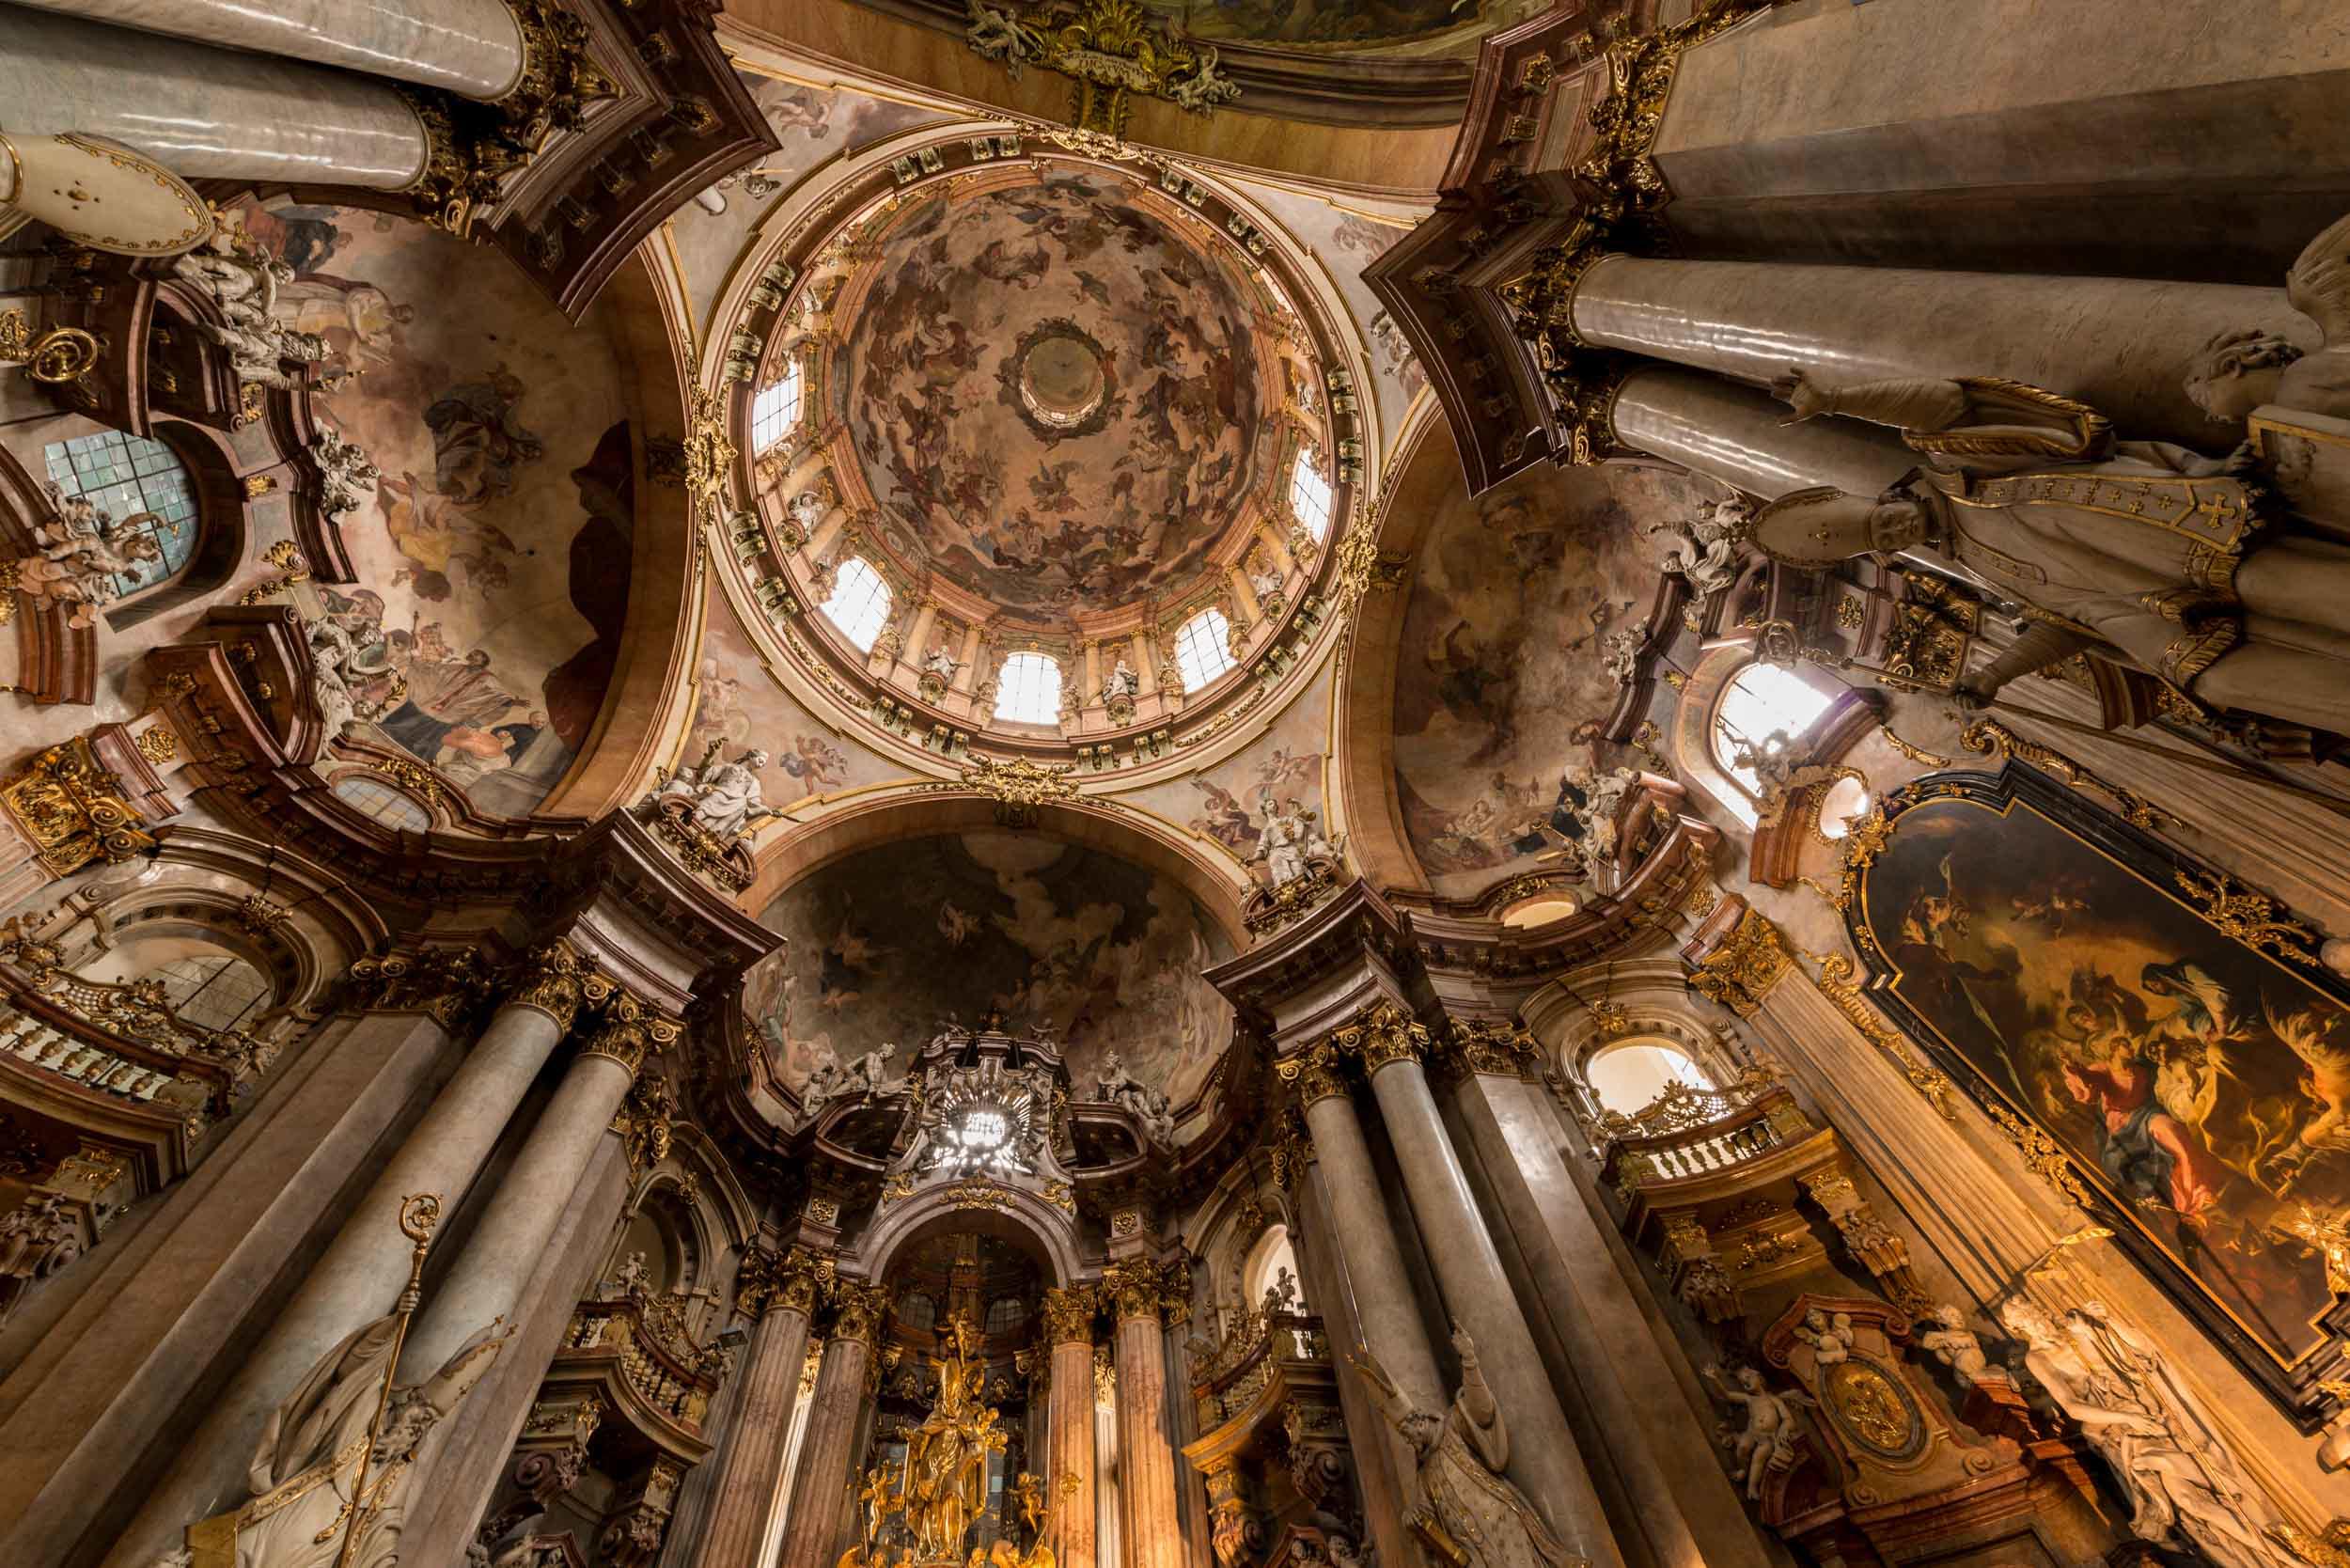 nicholas-church-ceiling-interior-prague-czech-republic-architecture